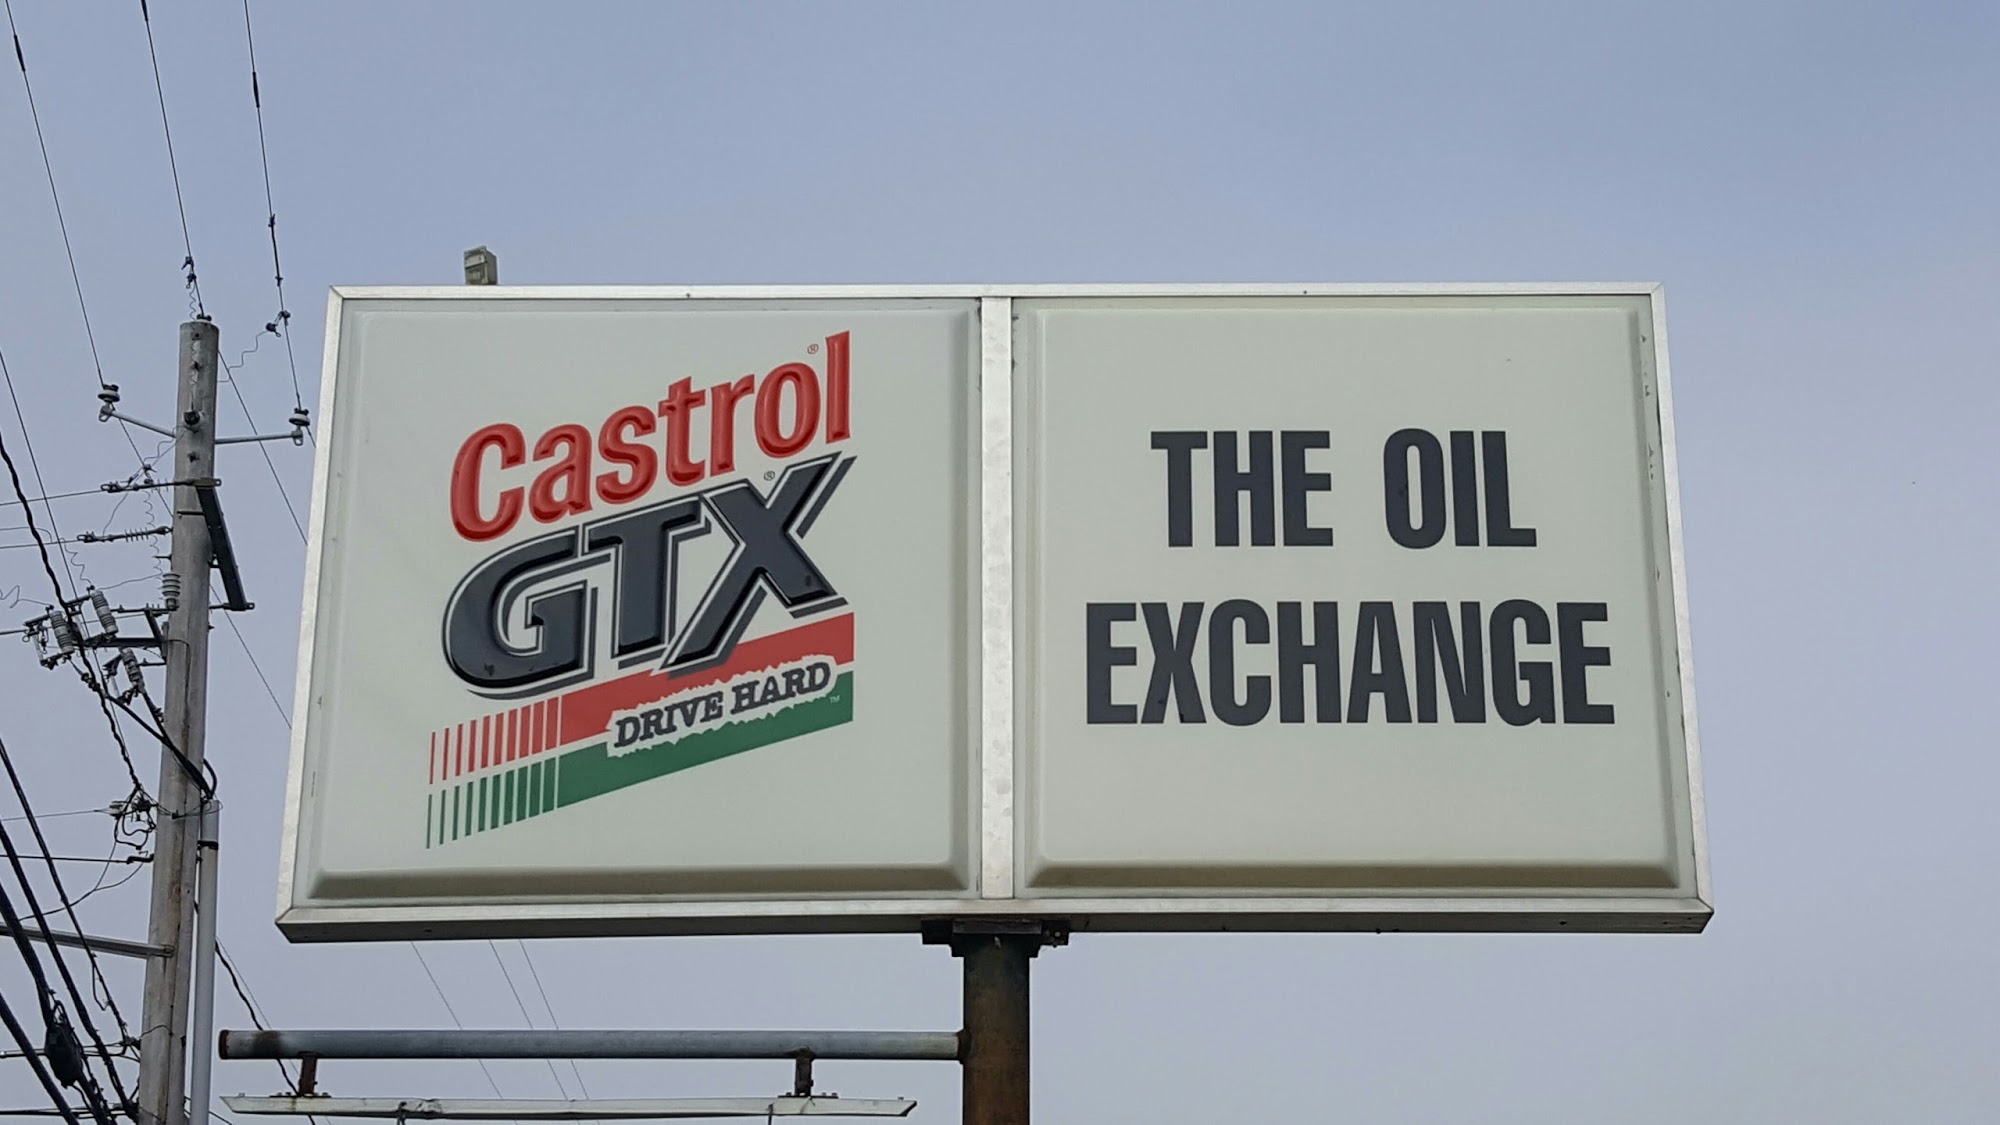 Oil Exchange